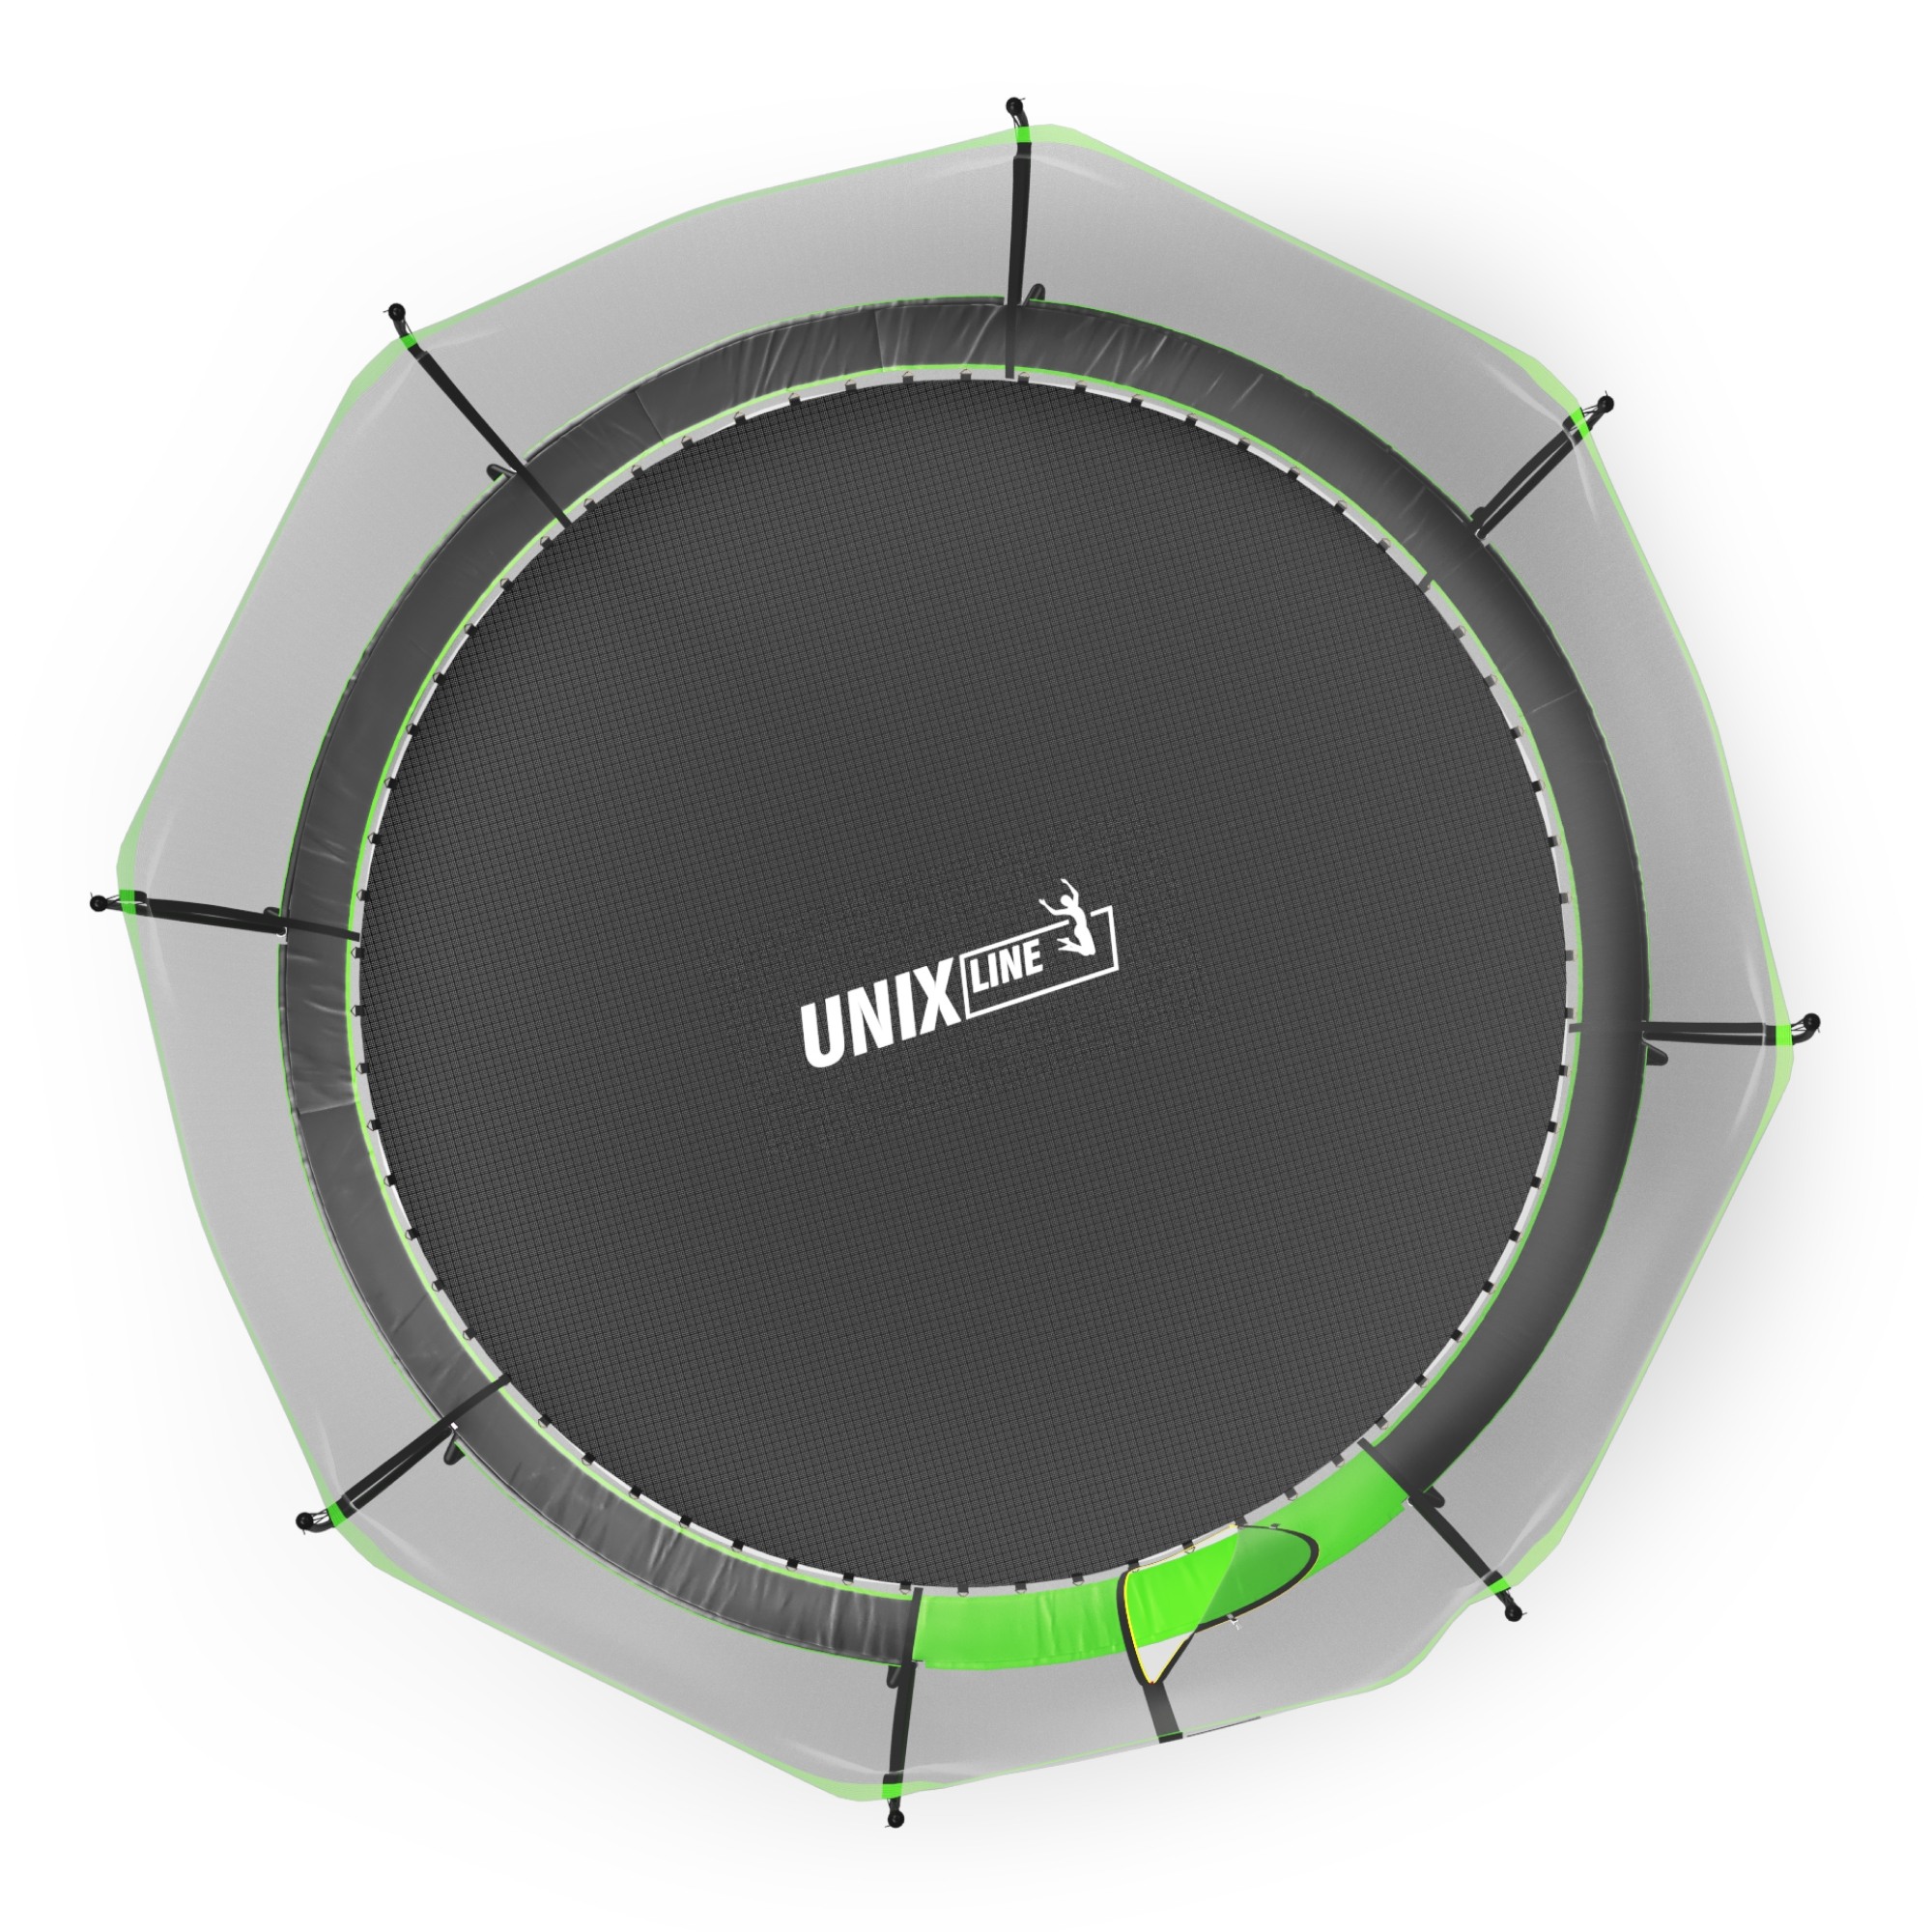 Батут 12 ft Unix Line UFO TRUF12GR4 Green 2000_2000